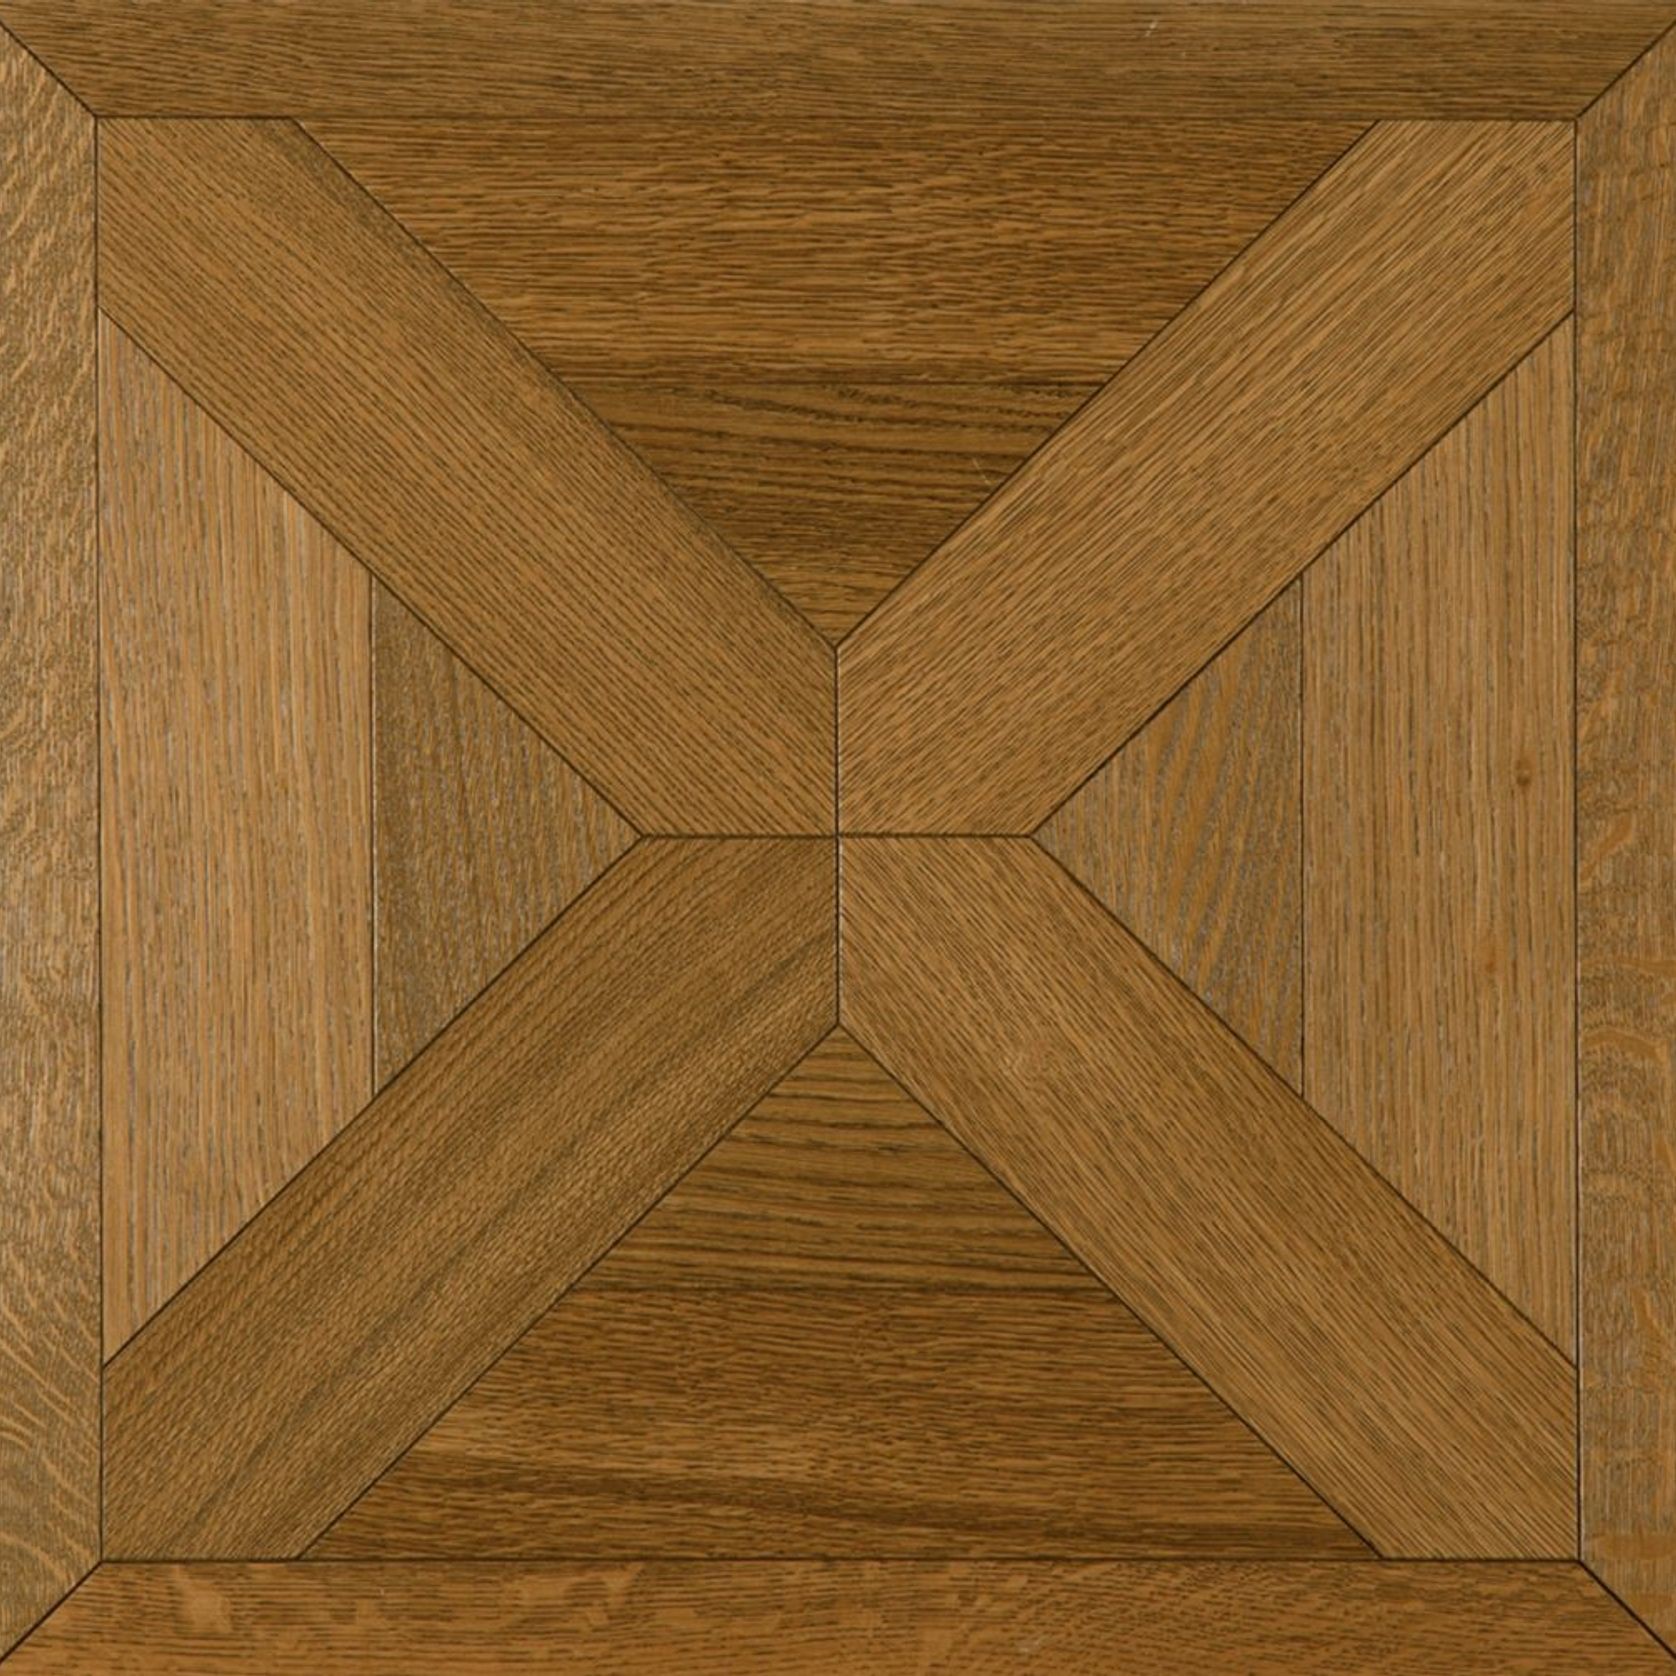 Parquet Patterns by IPF - Timber & Parquet Flooring gallery detail image